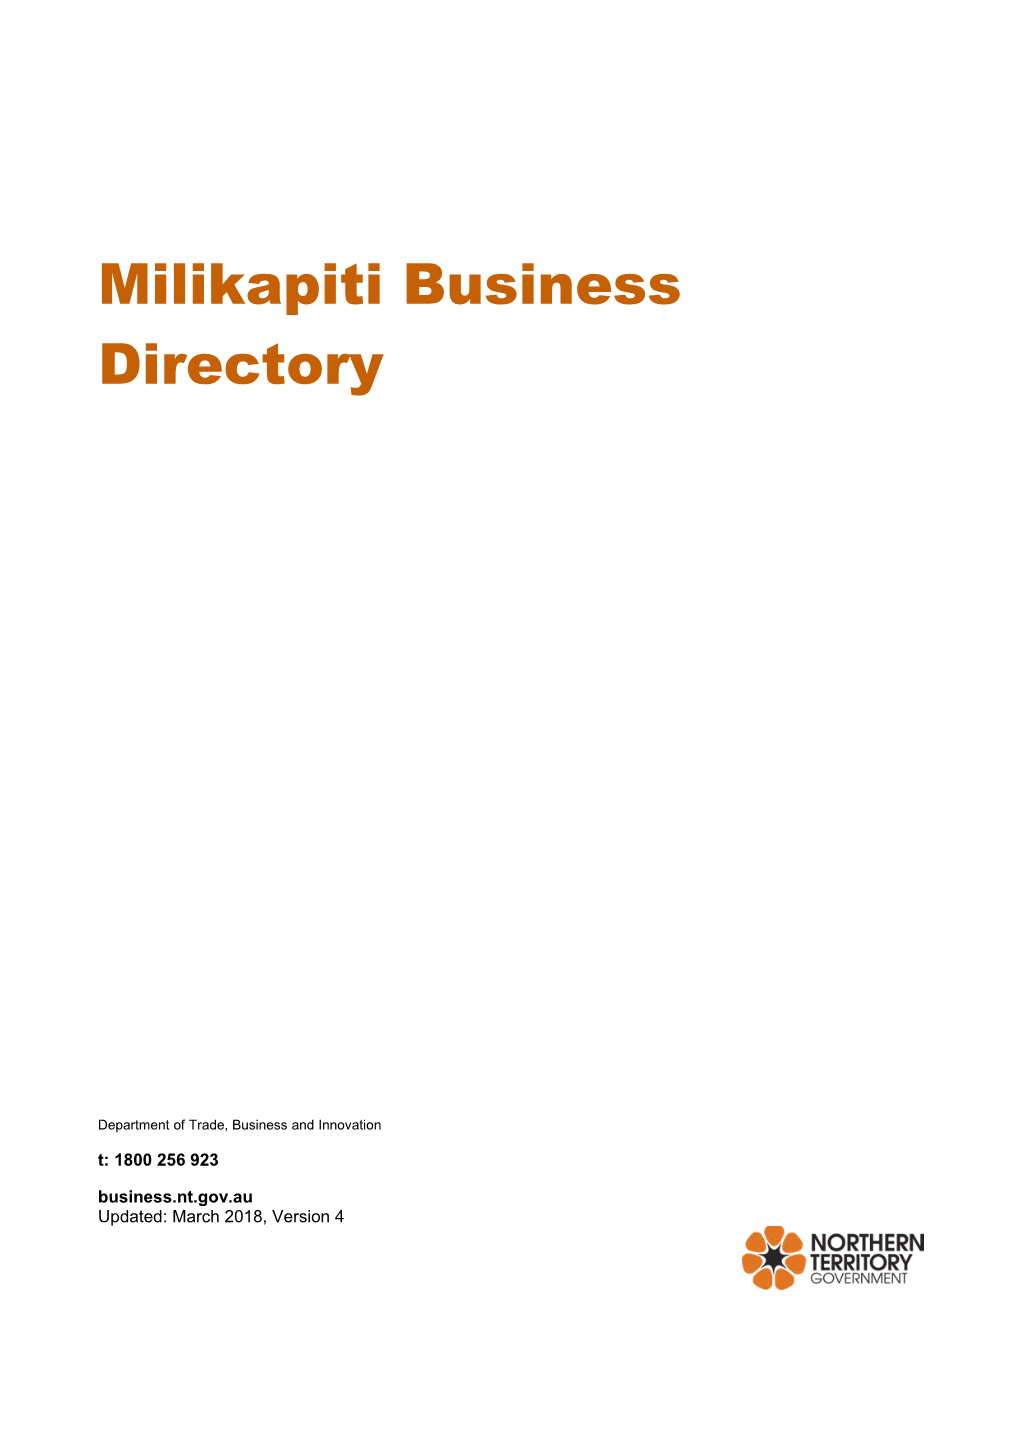 Milikapiti Business Directory